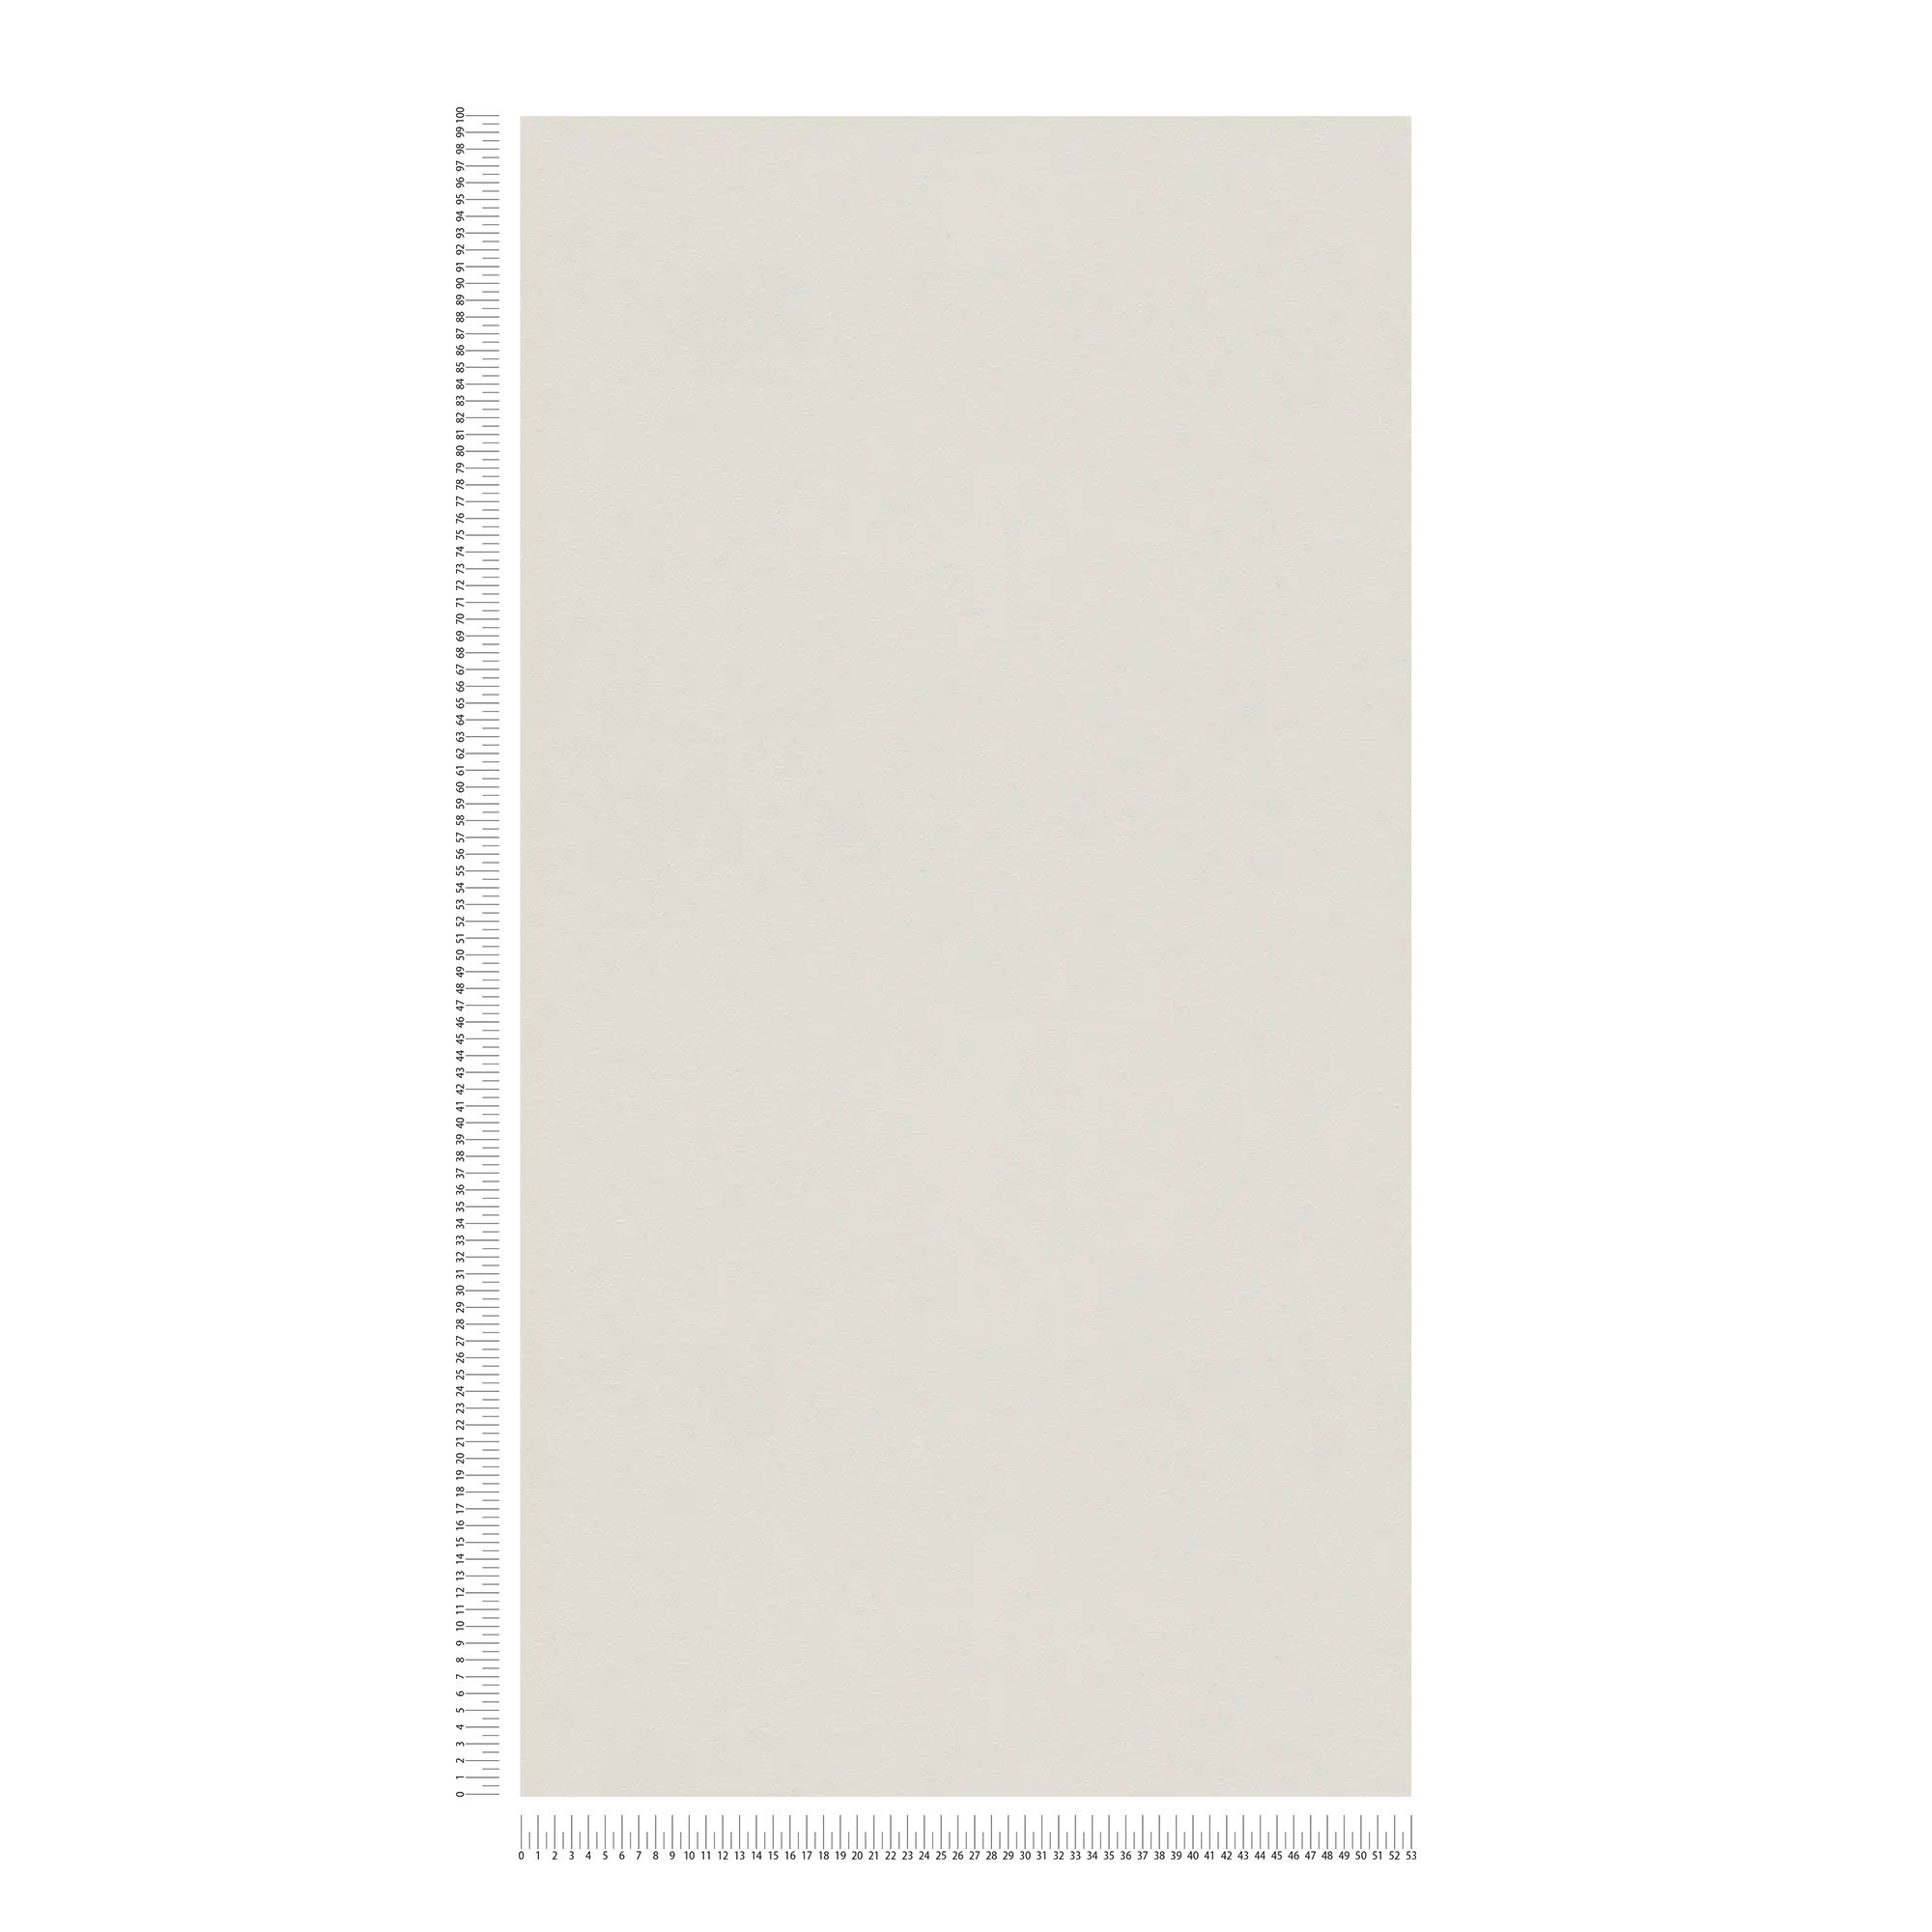             Neutral plain wallpaper with silk matte surface - grey
        